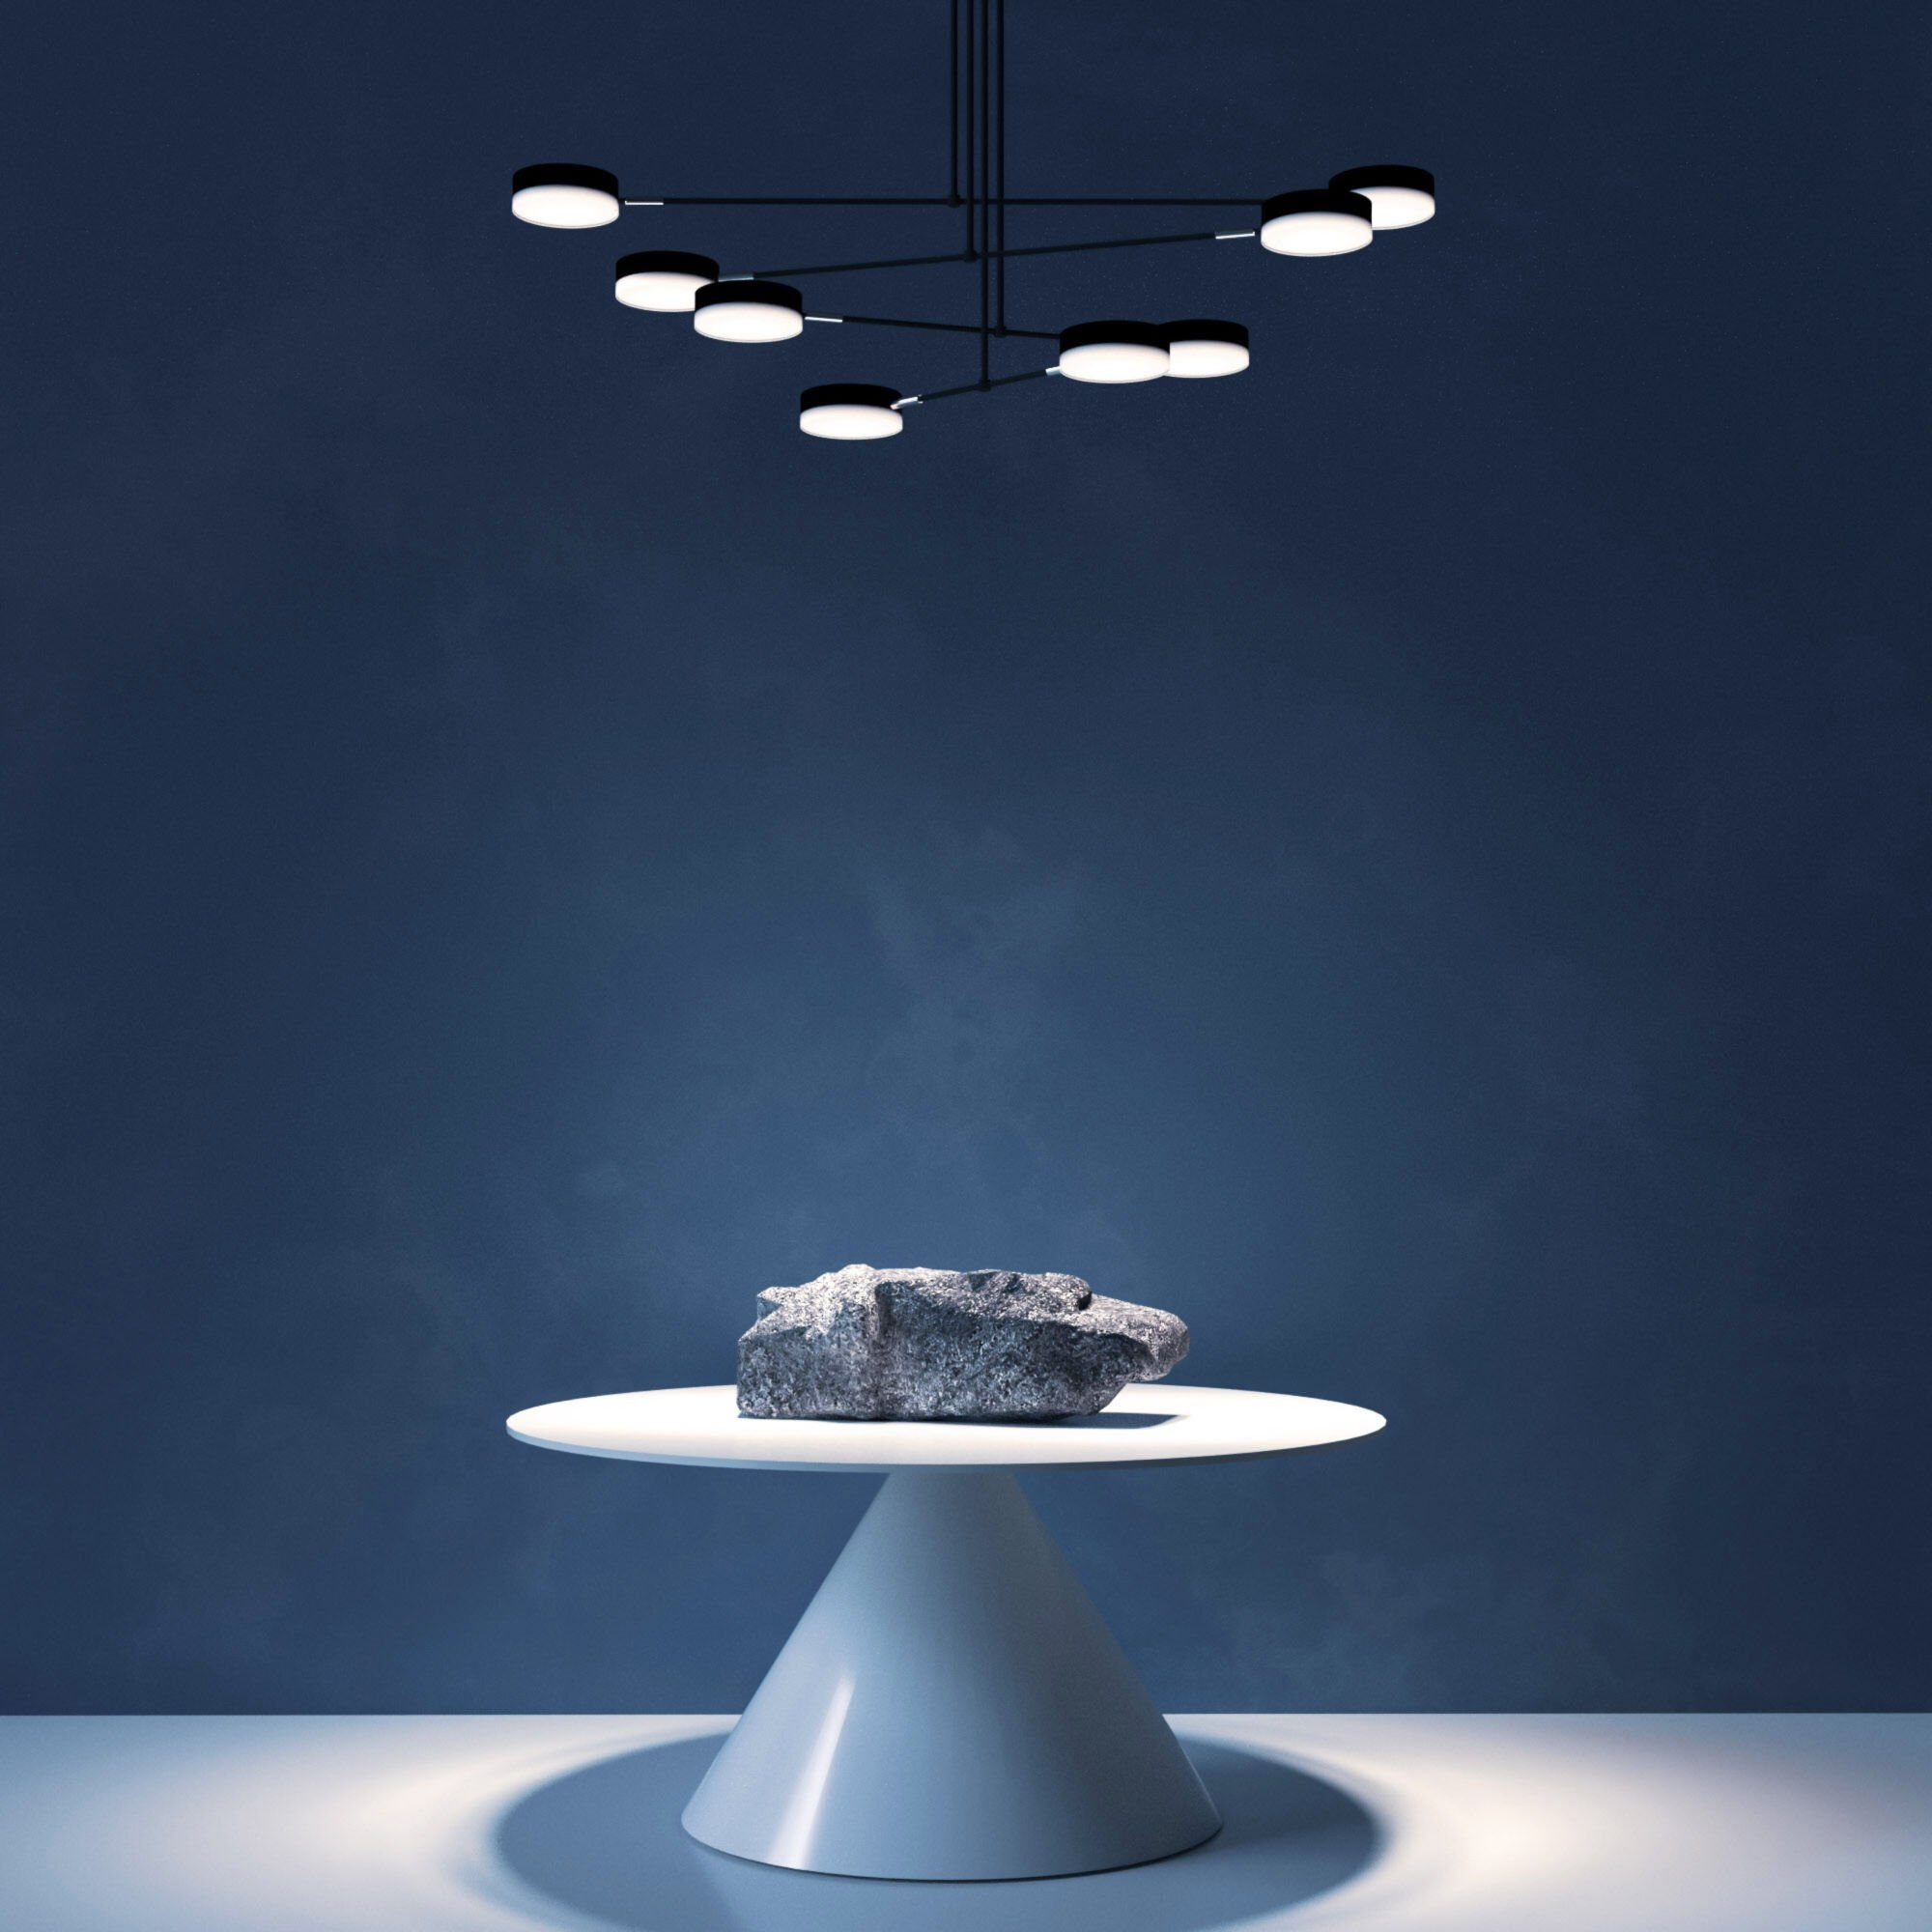 dekoratives integriert, MAYTONI DECORATIVE 61.6x107x55 Design Pendelleuchte Lampe Raumobjekt fest Fad LIGHTING LED 2 & cm, hochwertige